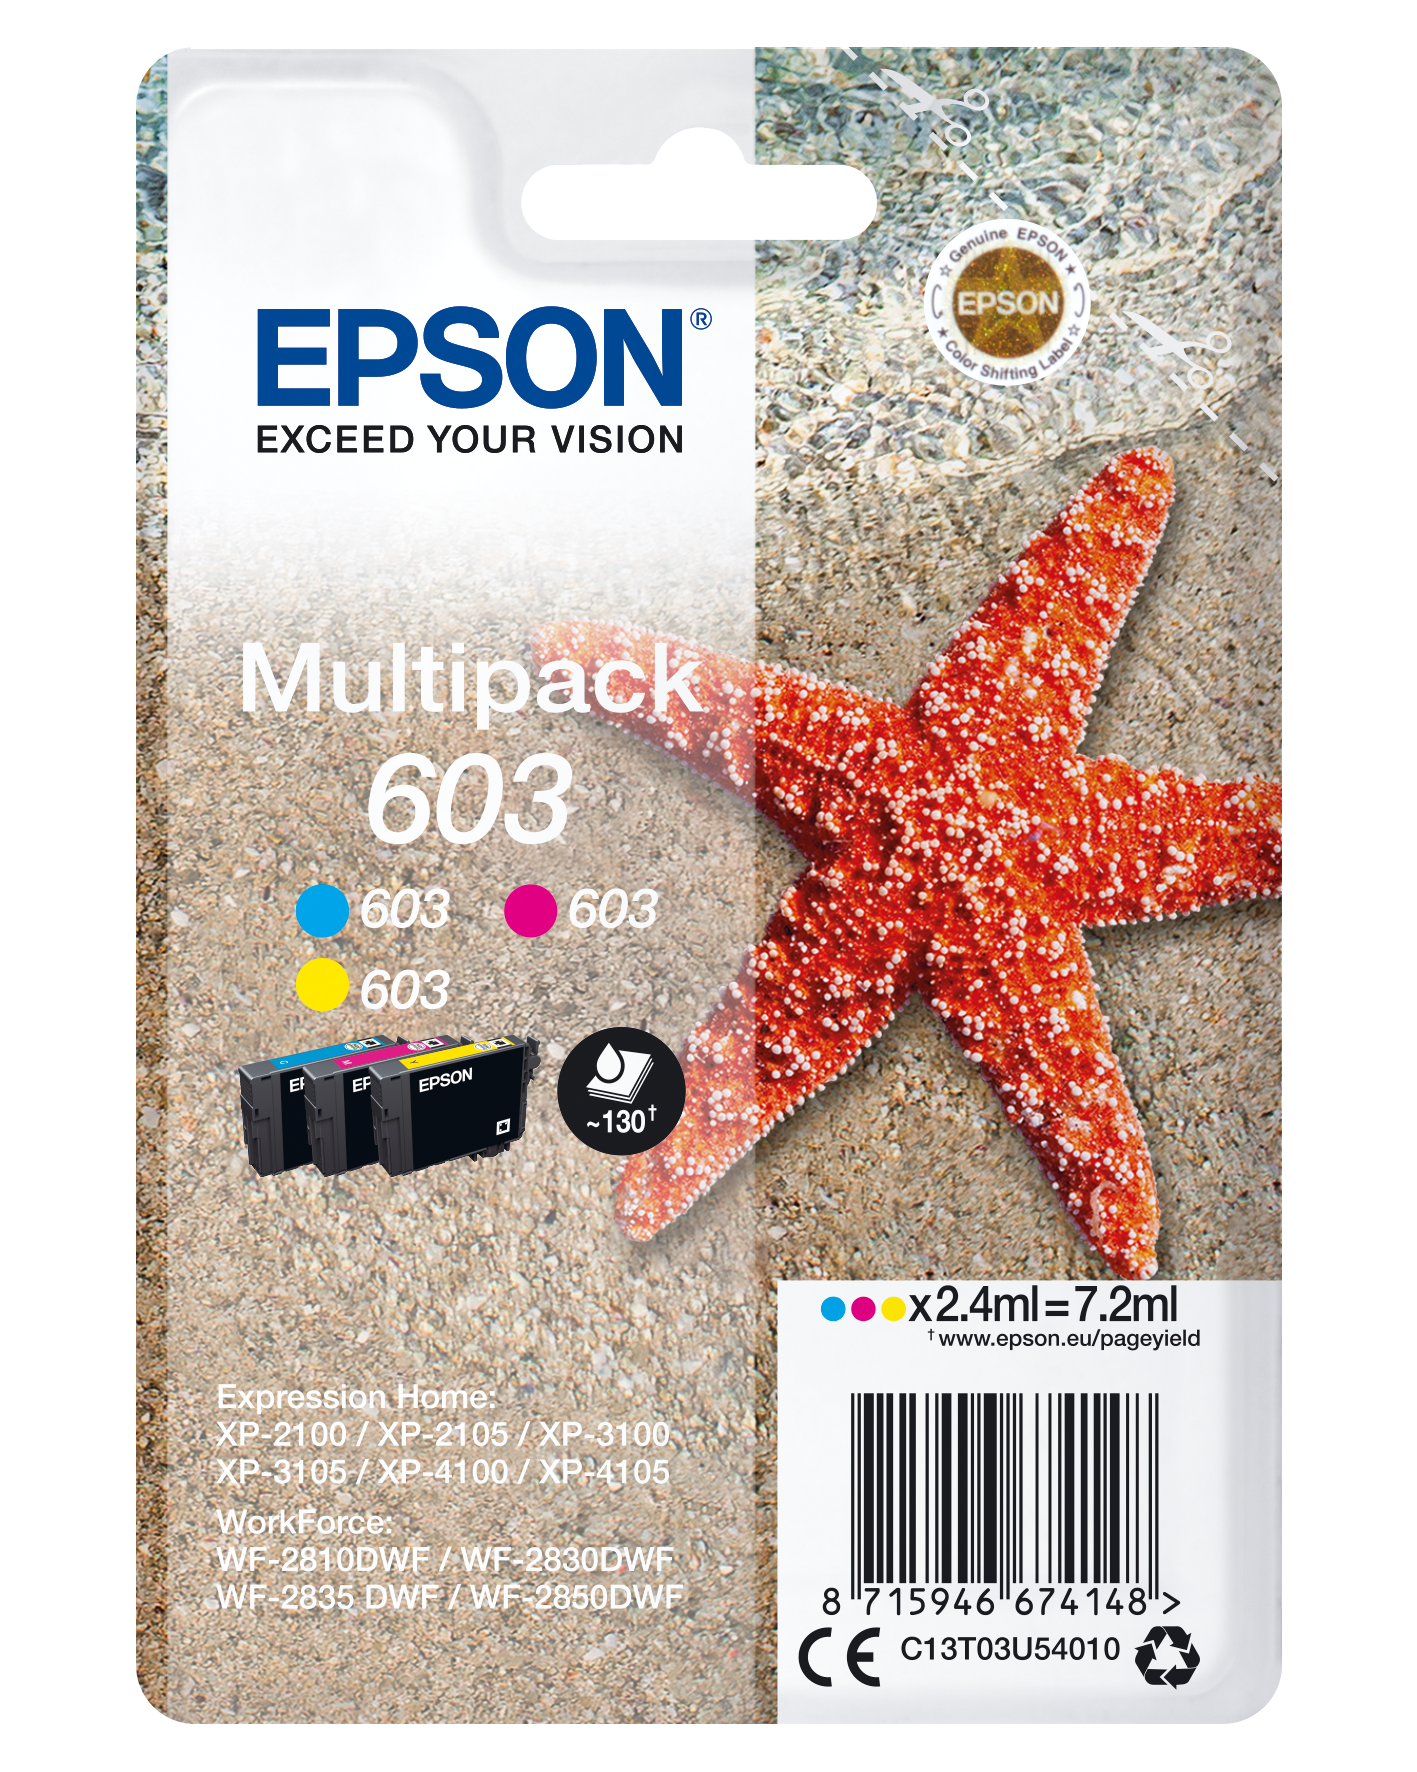 Multipack Epson 603 Druckerpatronen